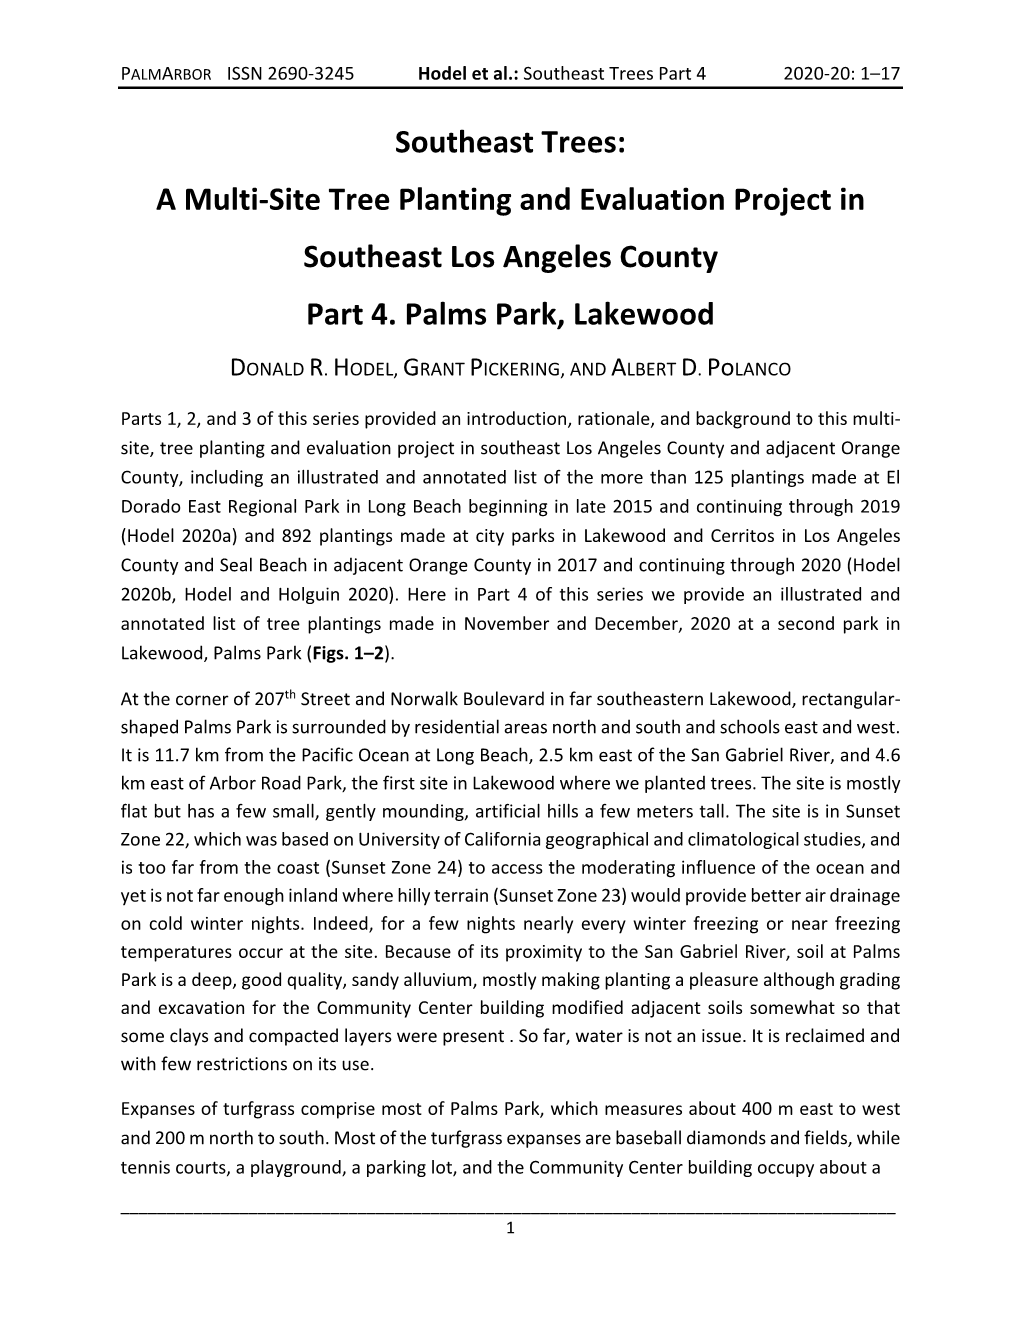 Southeast Trees Part 4 2020-20: 1–17